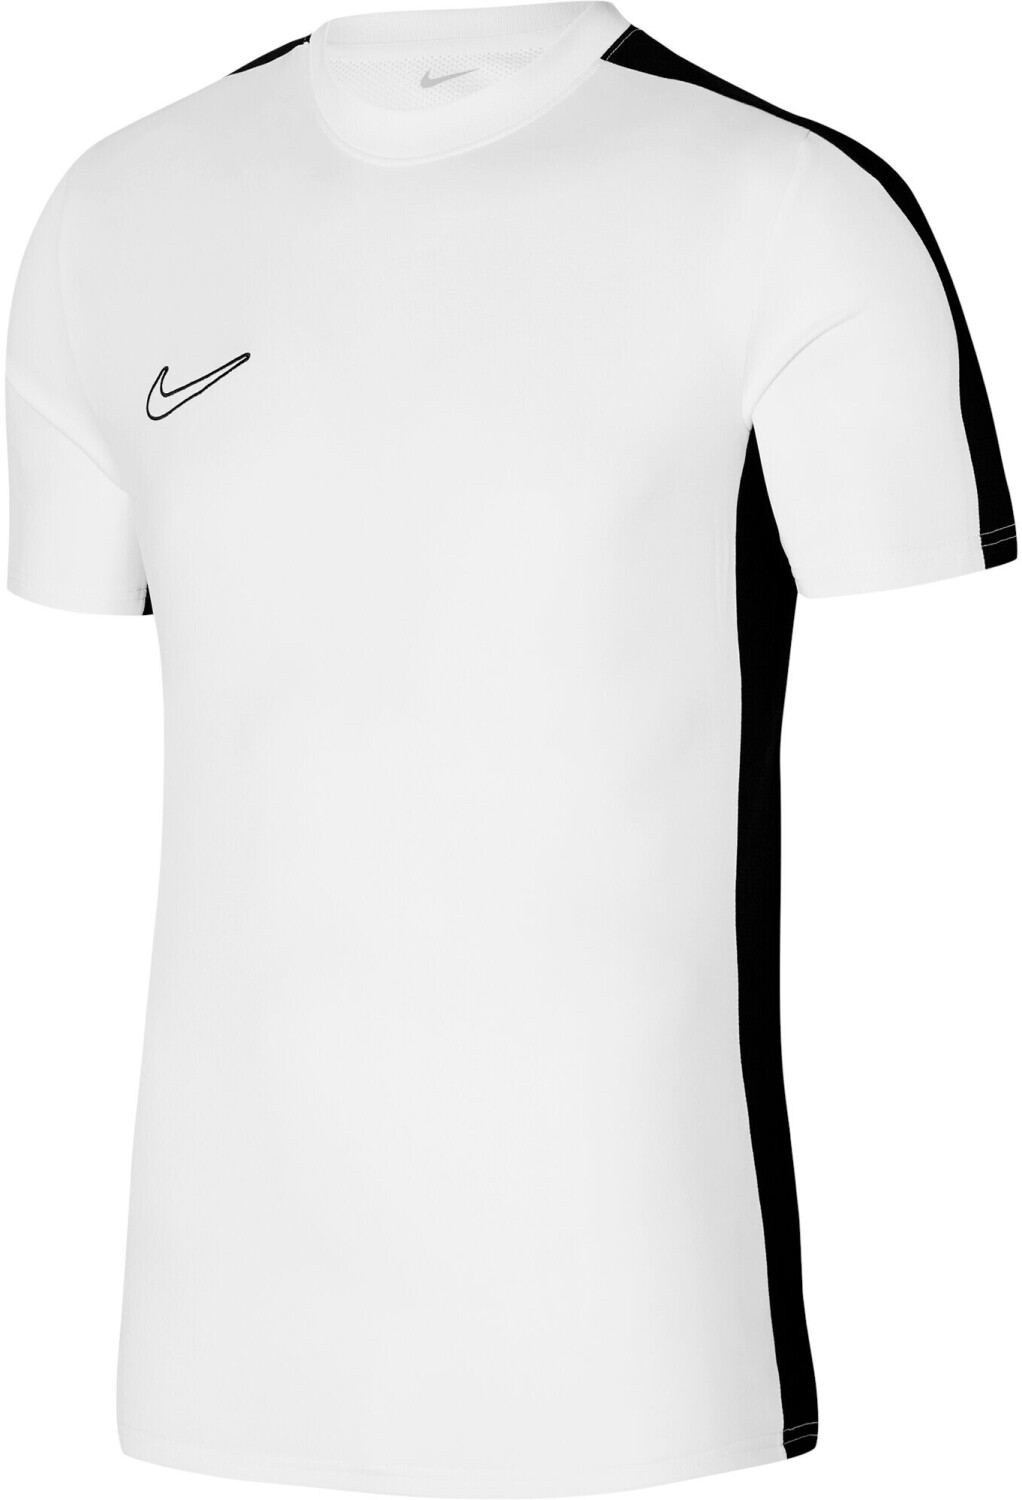 Nike Kinder Trainingsshirt Dri-FIT € Preisvergleich Academy ab 23 | white/black/black Top bei 8,64